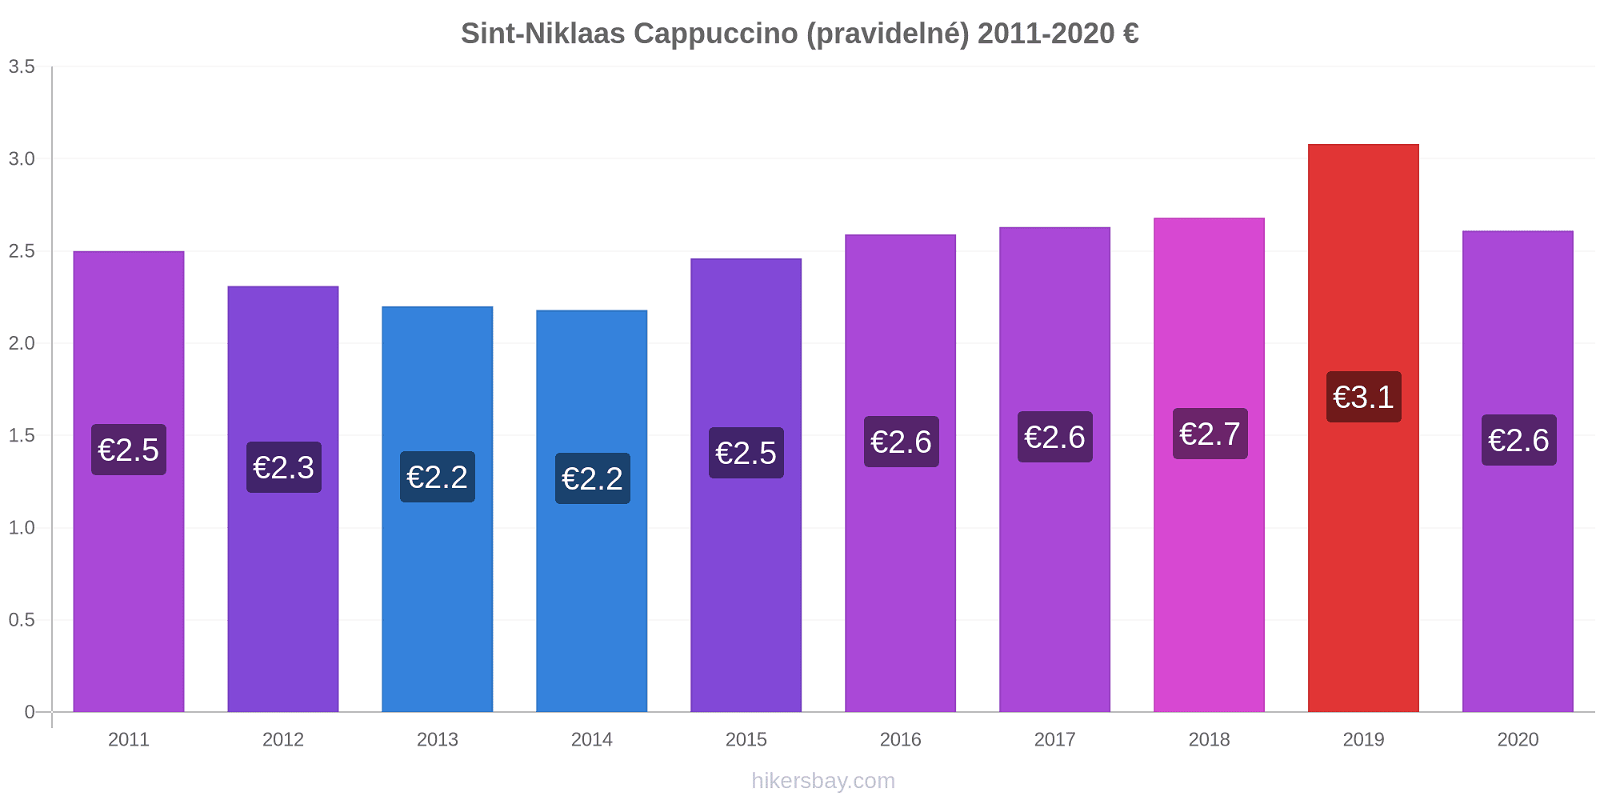 Sint-Niklaas změny cen Cappuccino (pravidelné) hikersbay.com